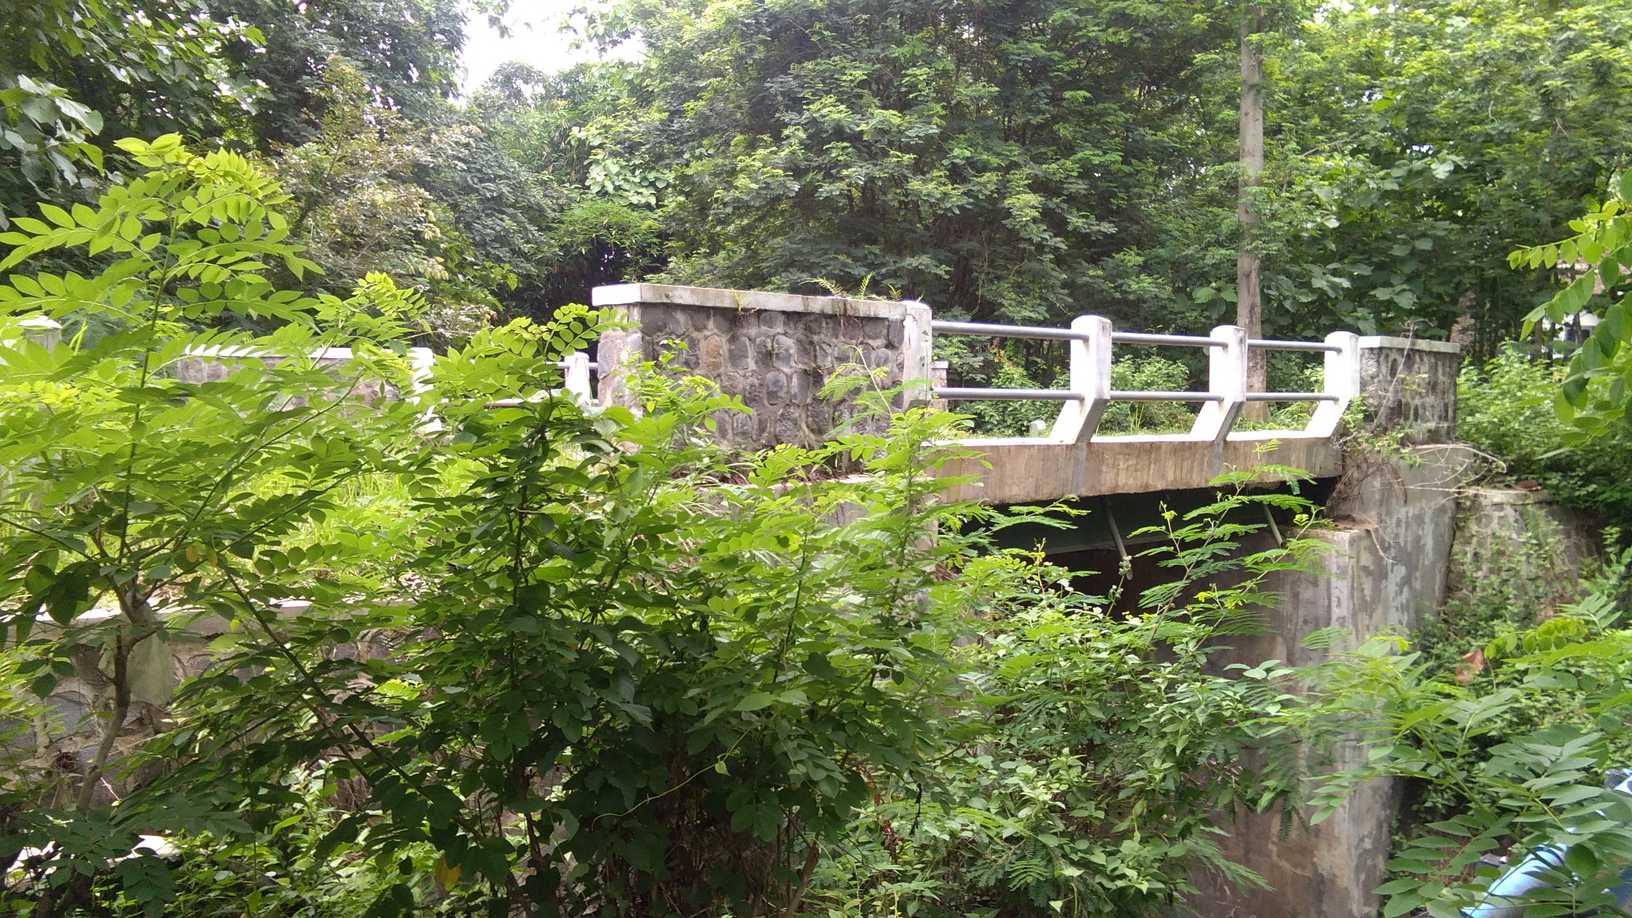 BAngunan Jembatan 9.5